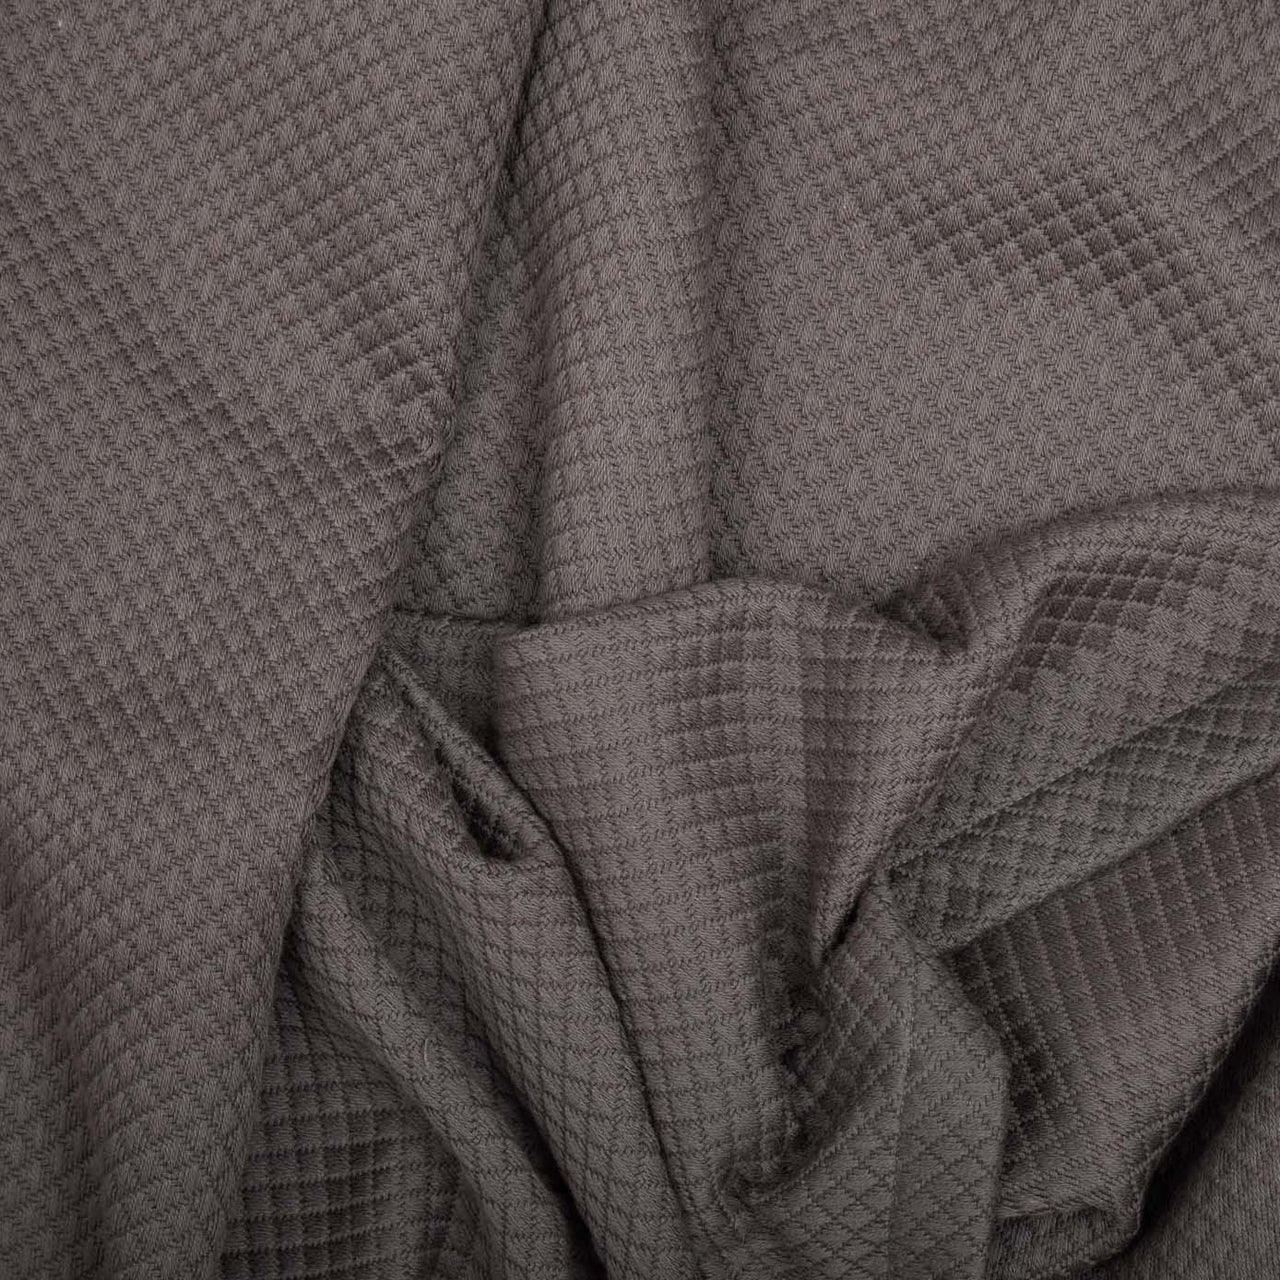 Serenity Grey Cotton Woven Blanket VHC Brands